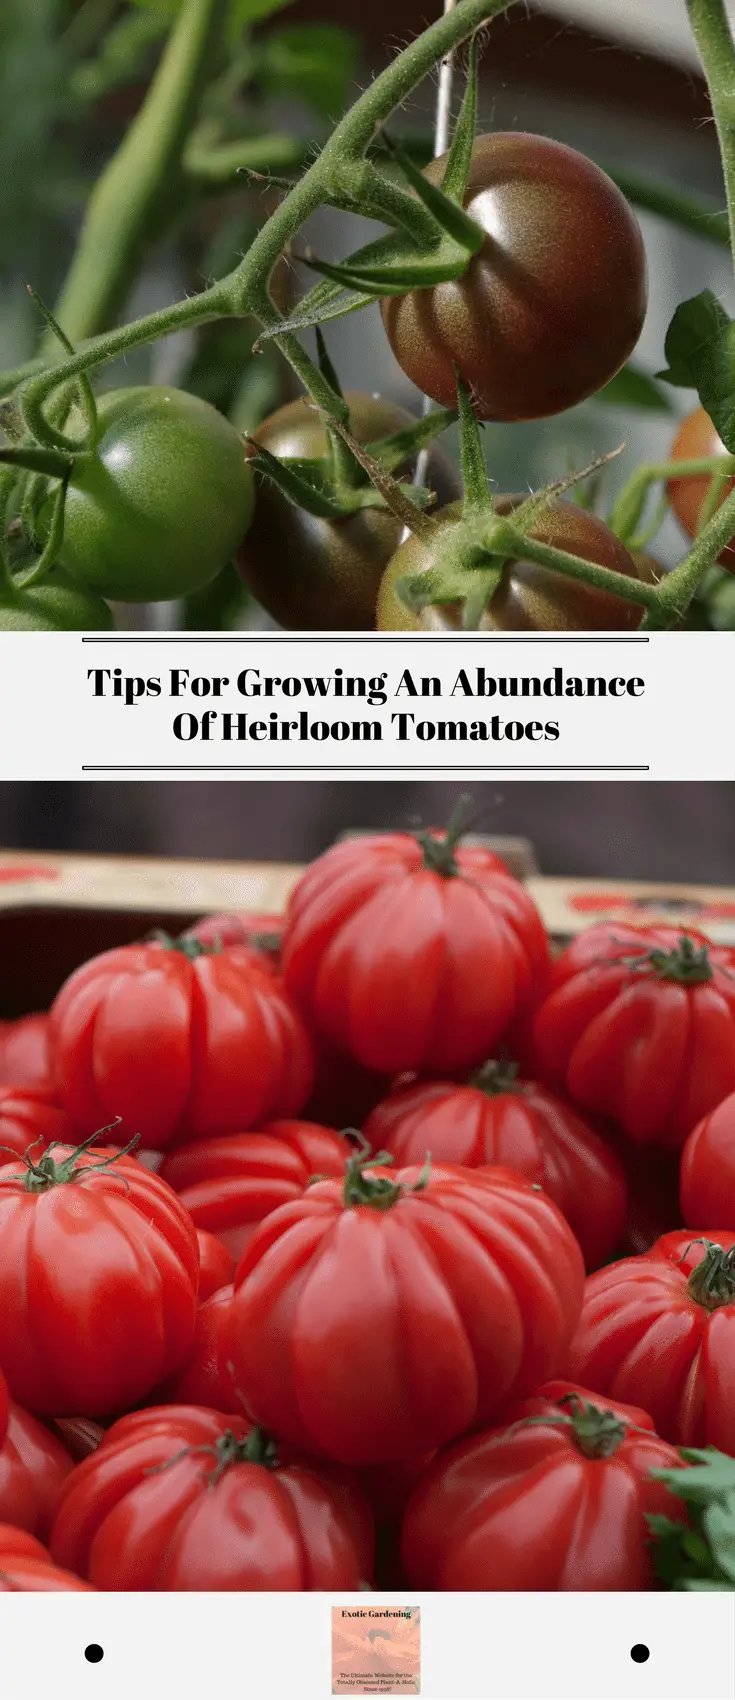 Tips For Growing An Abundance Of Heirloom Tomatoes